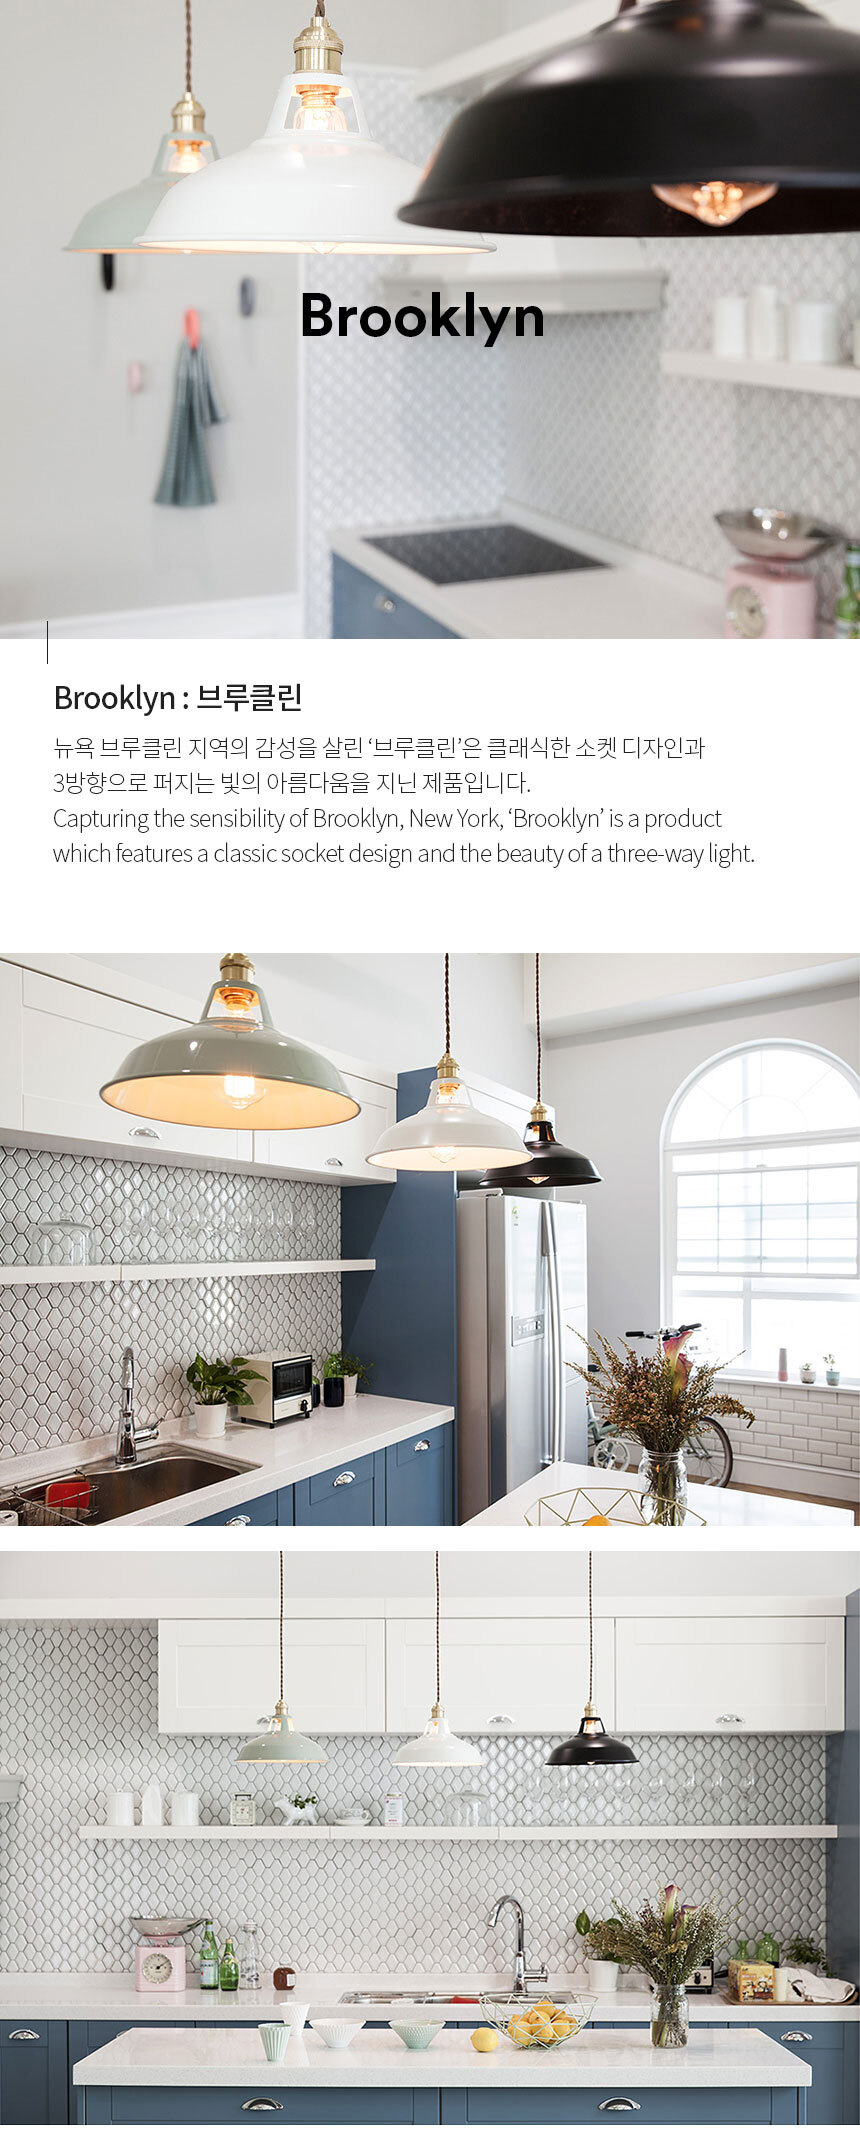 Brooklyn : 브루클린 뉴욕 브루클린 지역의 감성을 살린 ‘브루클린’은 클래식한 소켓 디자인과 
3방향으로 퍼지는 빛의 아름다움을 지닌 제품입니다.
Capturing the sensibility of Brooklyn, New York, ‘Brooklyn’ is a product 
which features a classic socket design and the beauty of a three-way light.